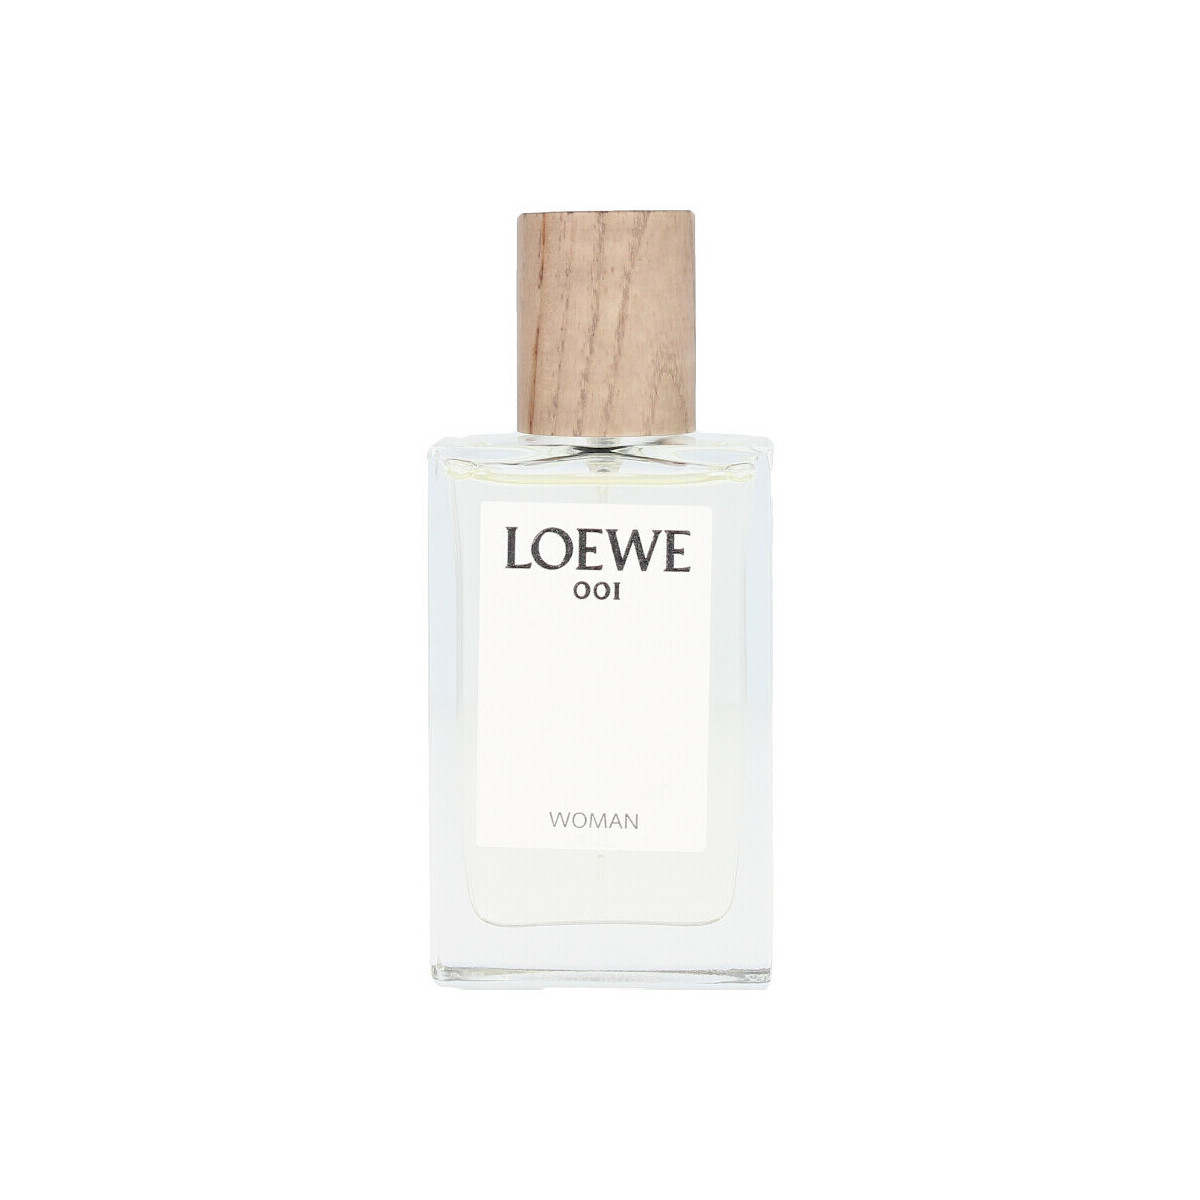 Belleza Mujer Perfume Loewe 001 Woman Eau De Parfum Vaporizador 